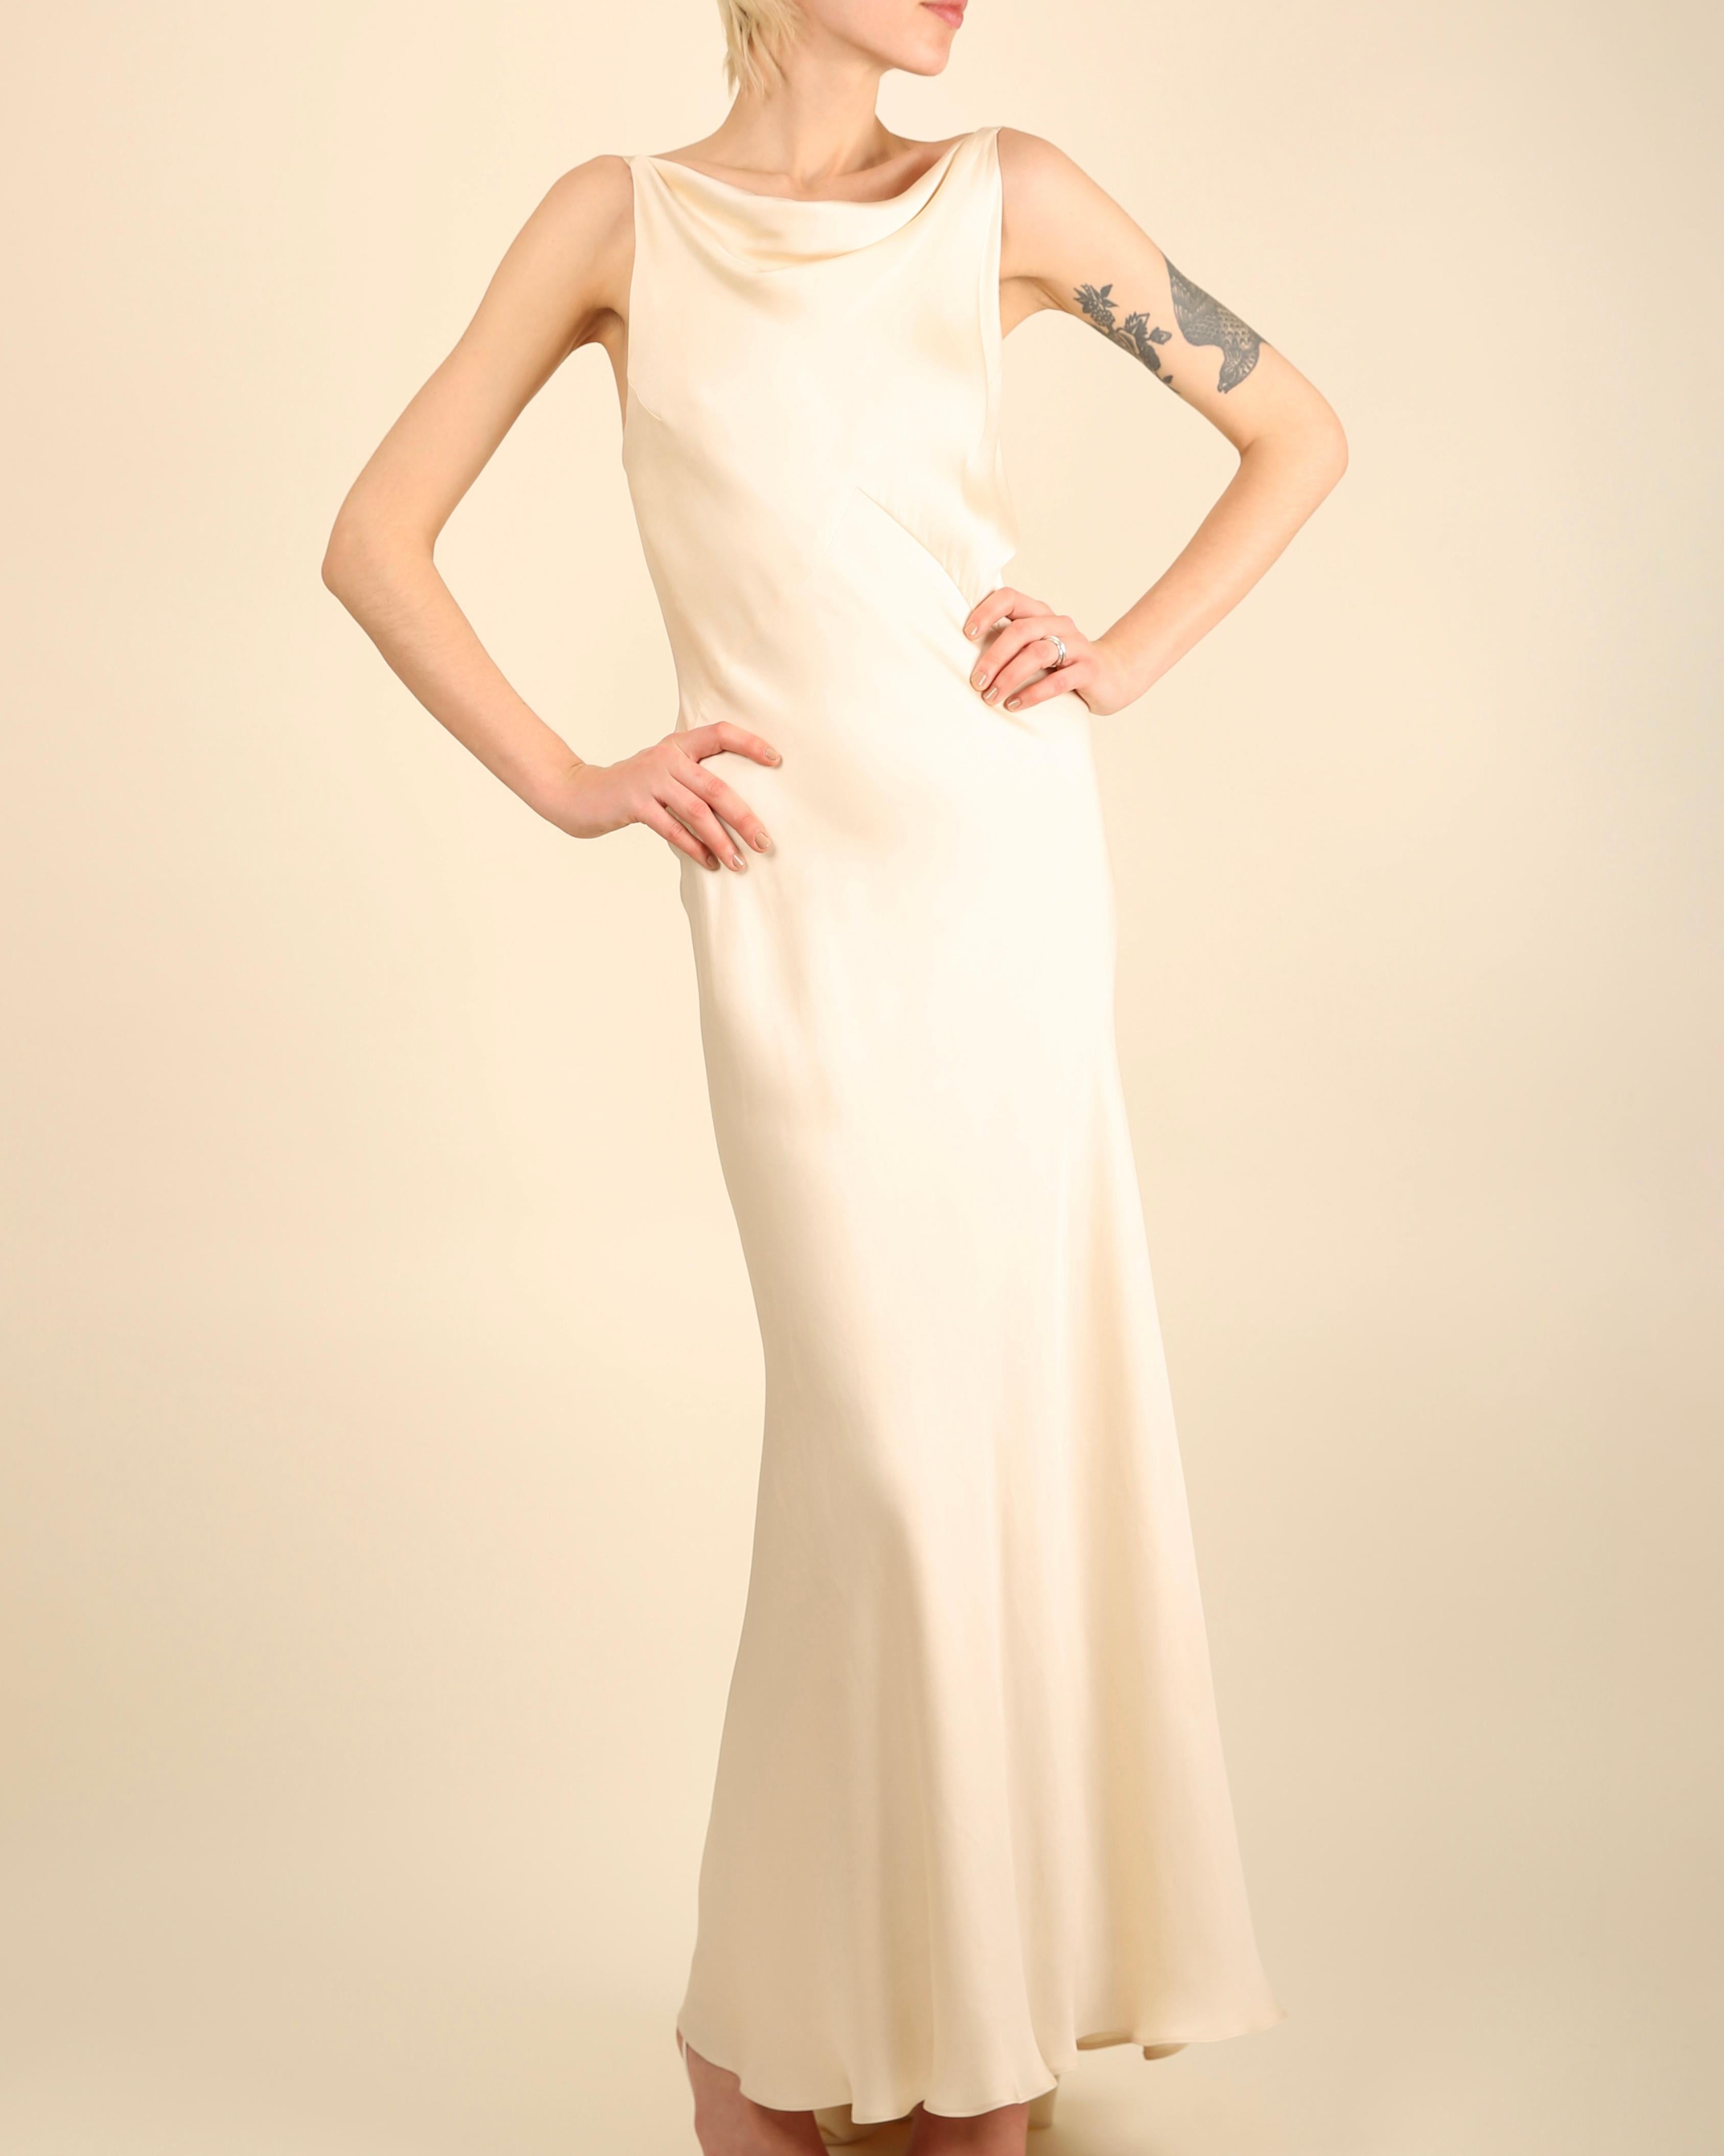 Ralph Lauren champagne bias cut backless silk slip style backless gown dress 1